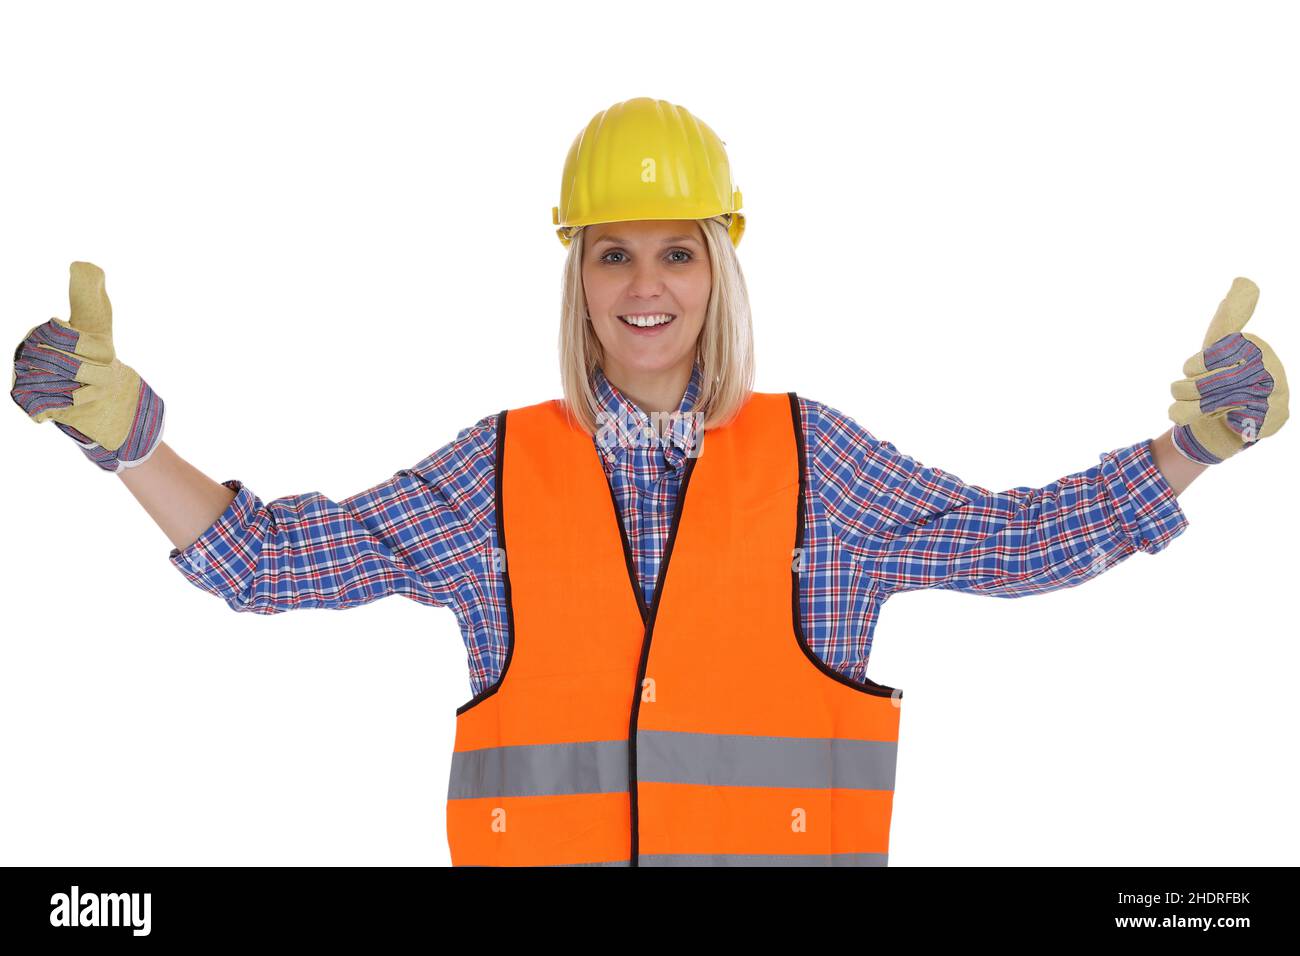 Bauarbeiter, Handwerker, Baumeister, Bauarbeiter, Bauarbeiter, Blauer Kragen, Arbeiter, Arbeiter, Arbeiter Stockfoto